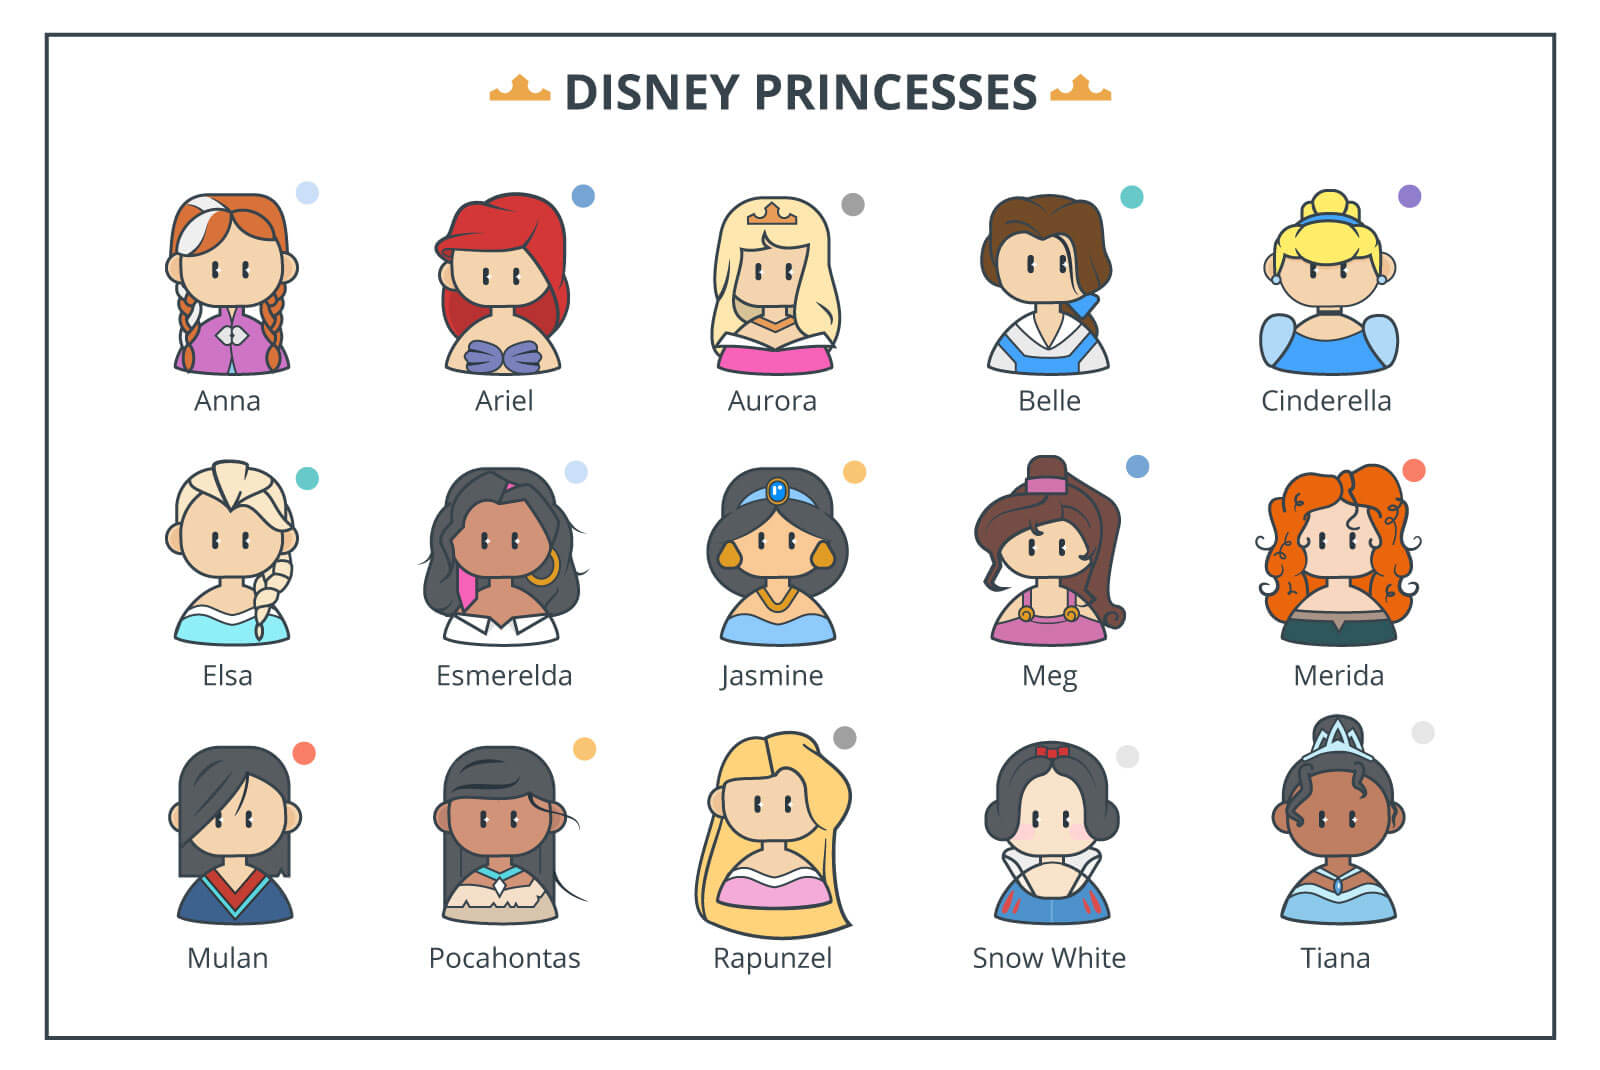 Illustrated cartoon headshots of 15 Disney princesses.